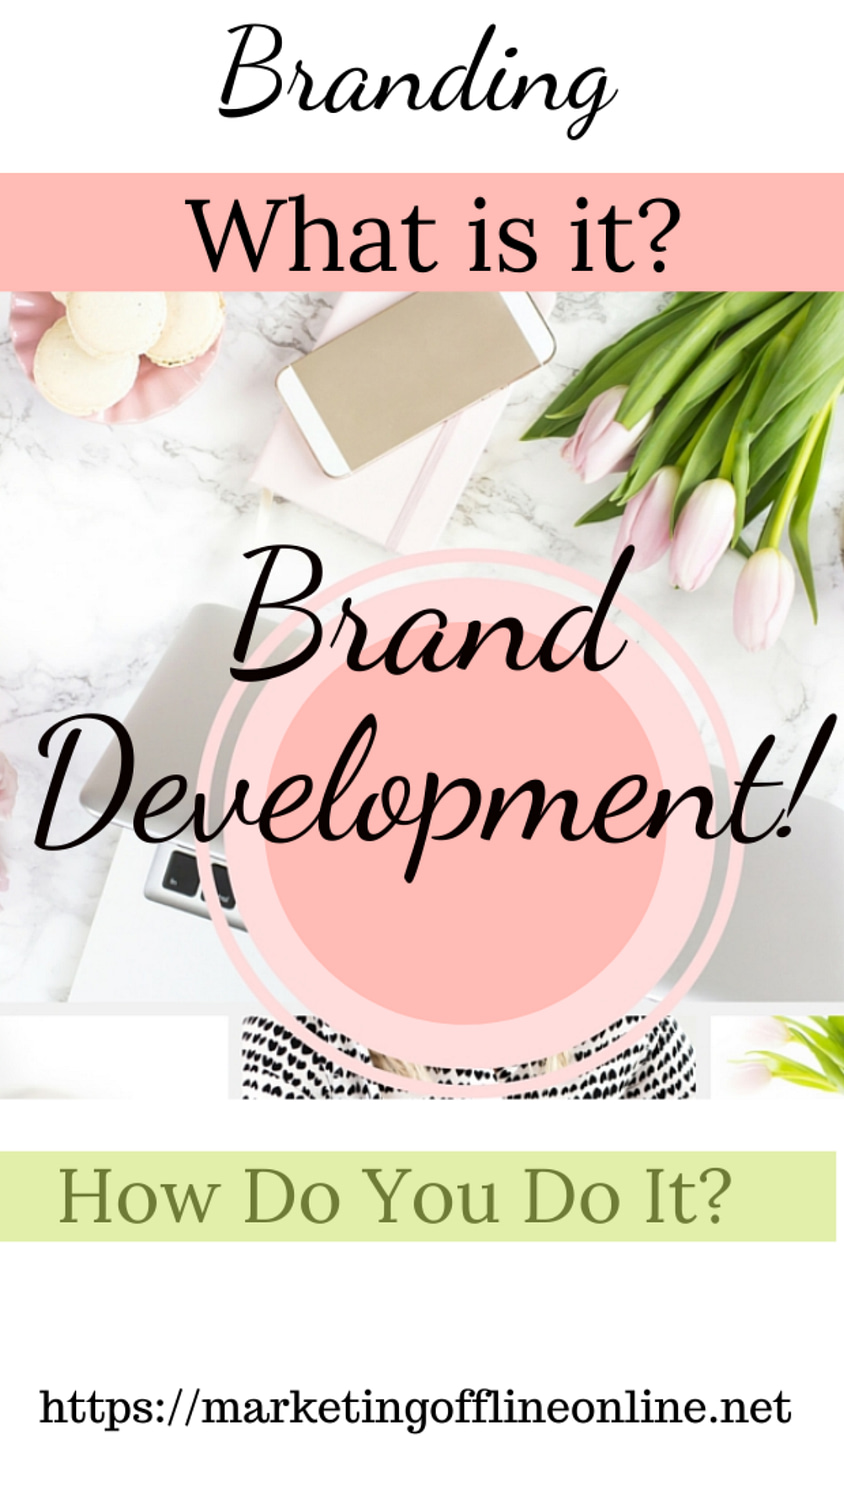 Brand Development article